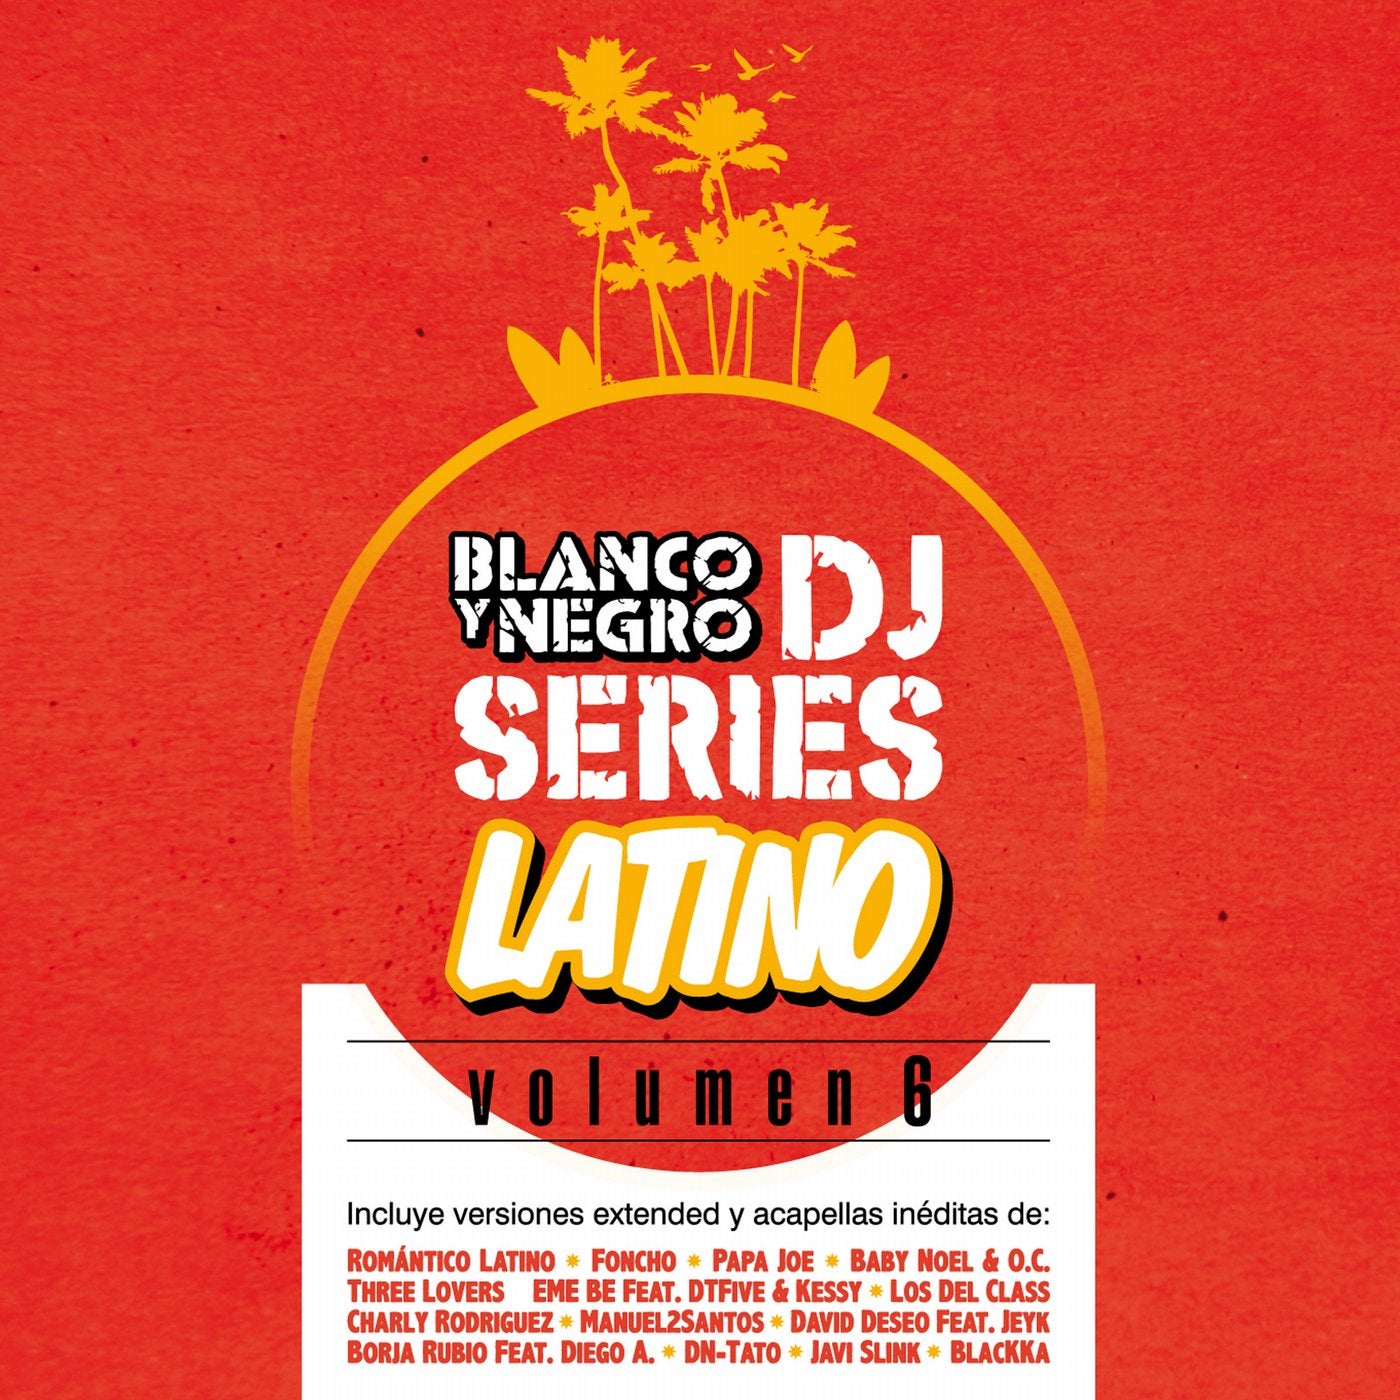 Blanco y Negro DJ Series Latino, Vol. 6